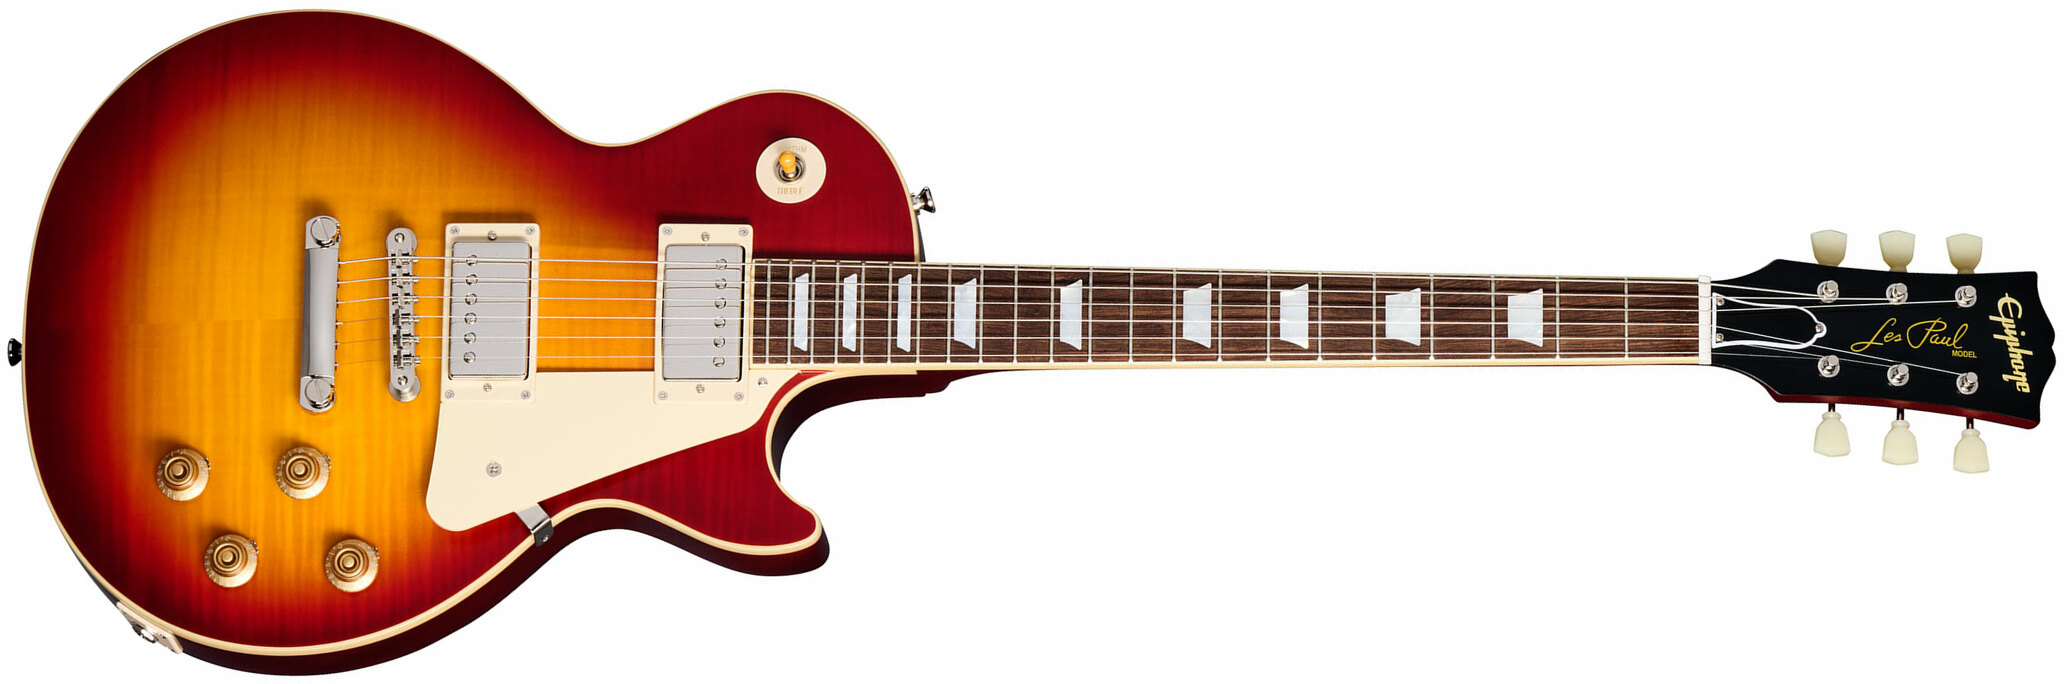 Epiphone 1959 Les Paul Standard Inspired By 2h Gibson Ht Lau - Vos Factory Burst - Single-Cut-E-Gitarre - Main picture